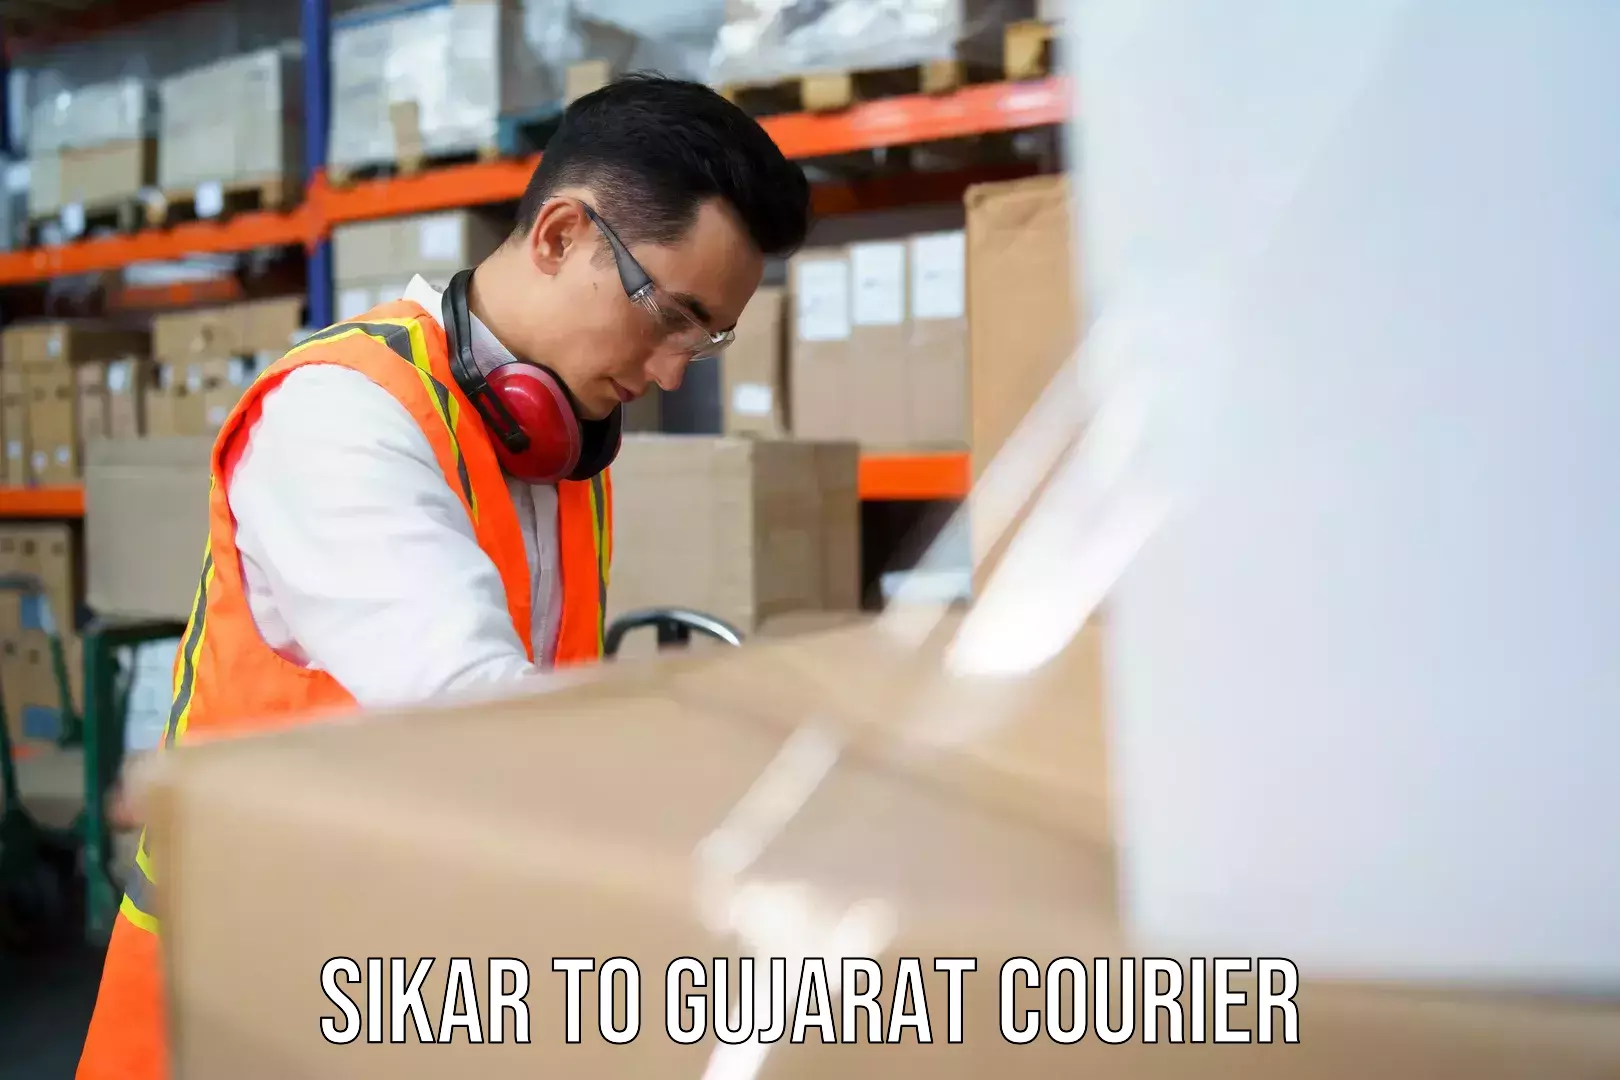 High-speed logistics services Sikar to Gujarat